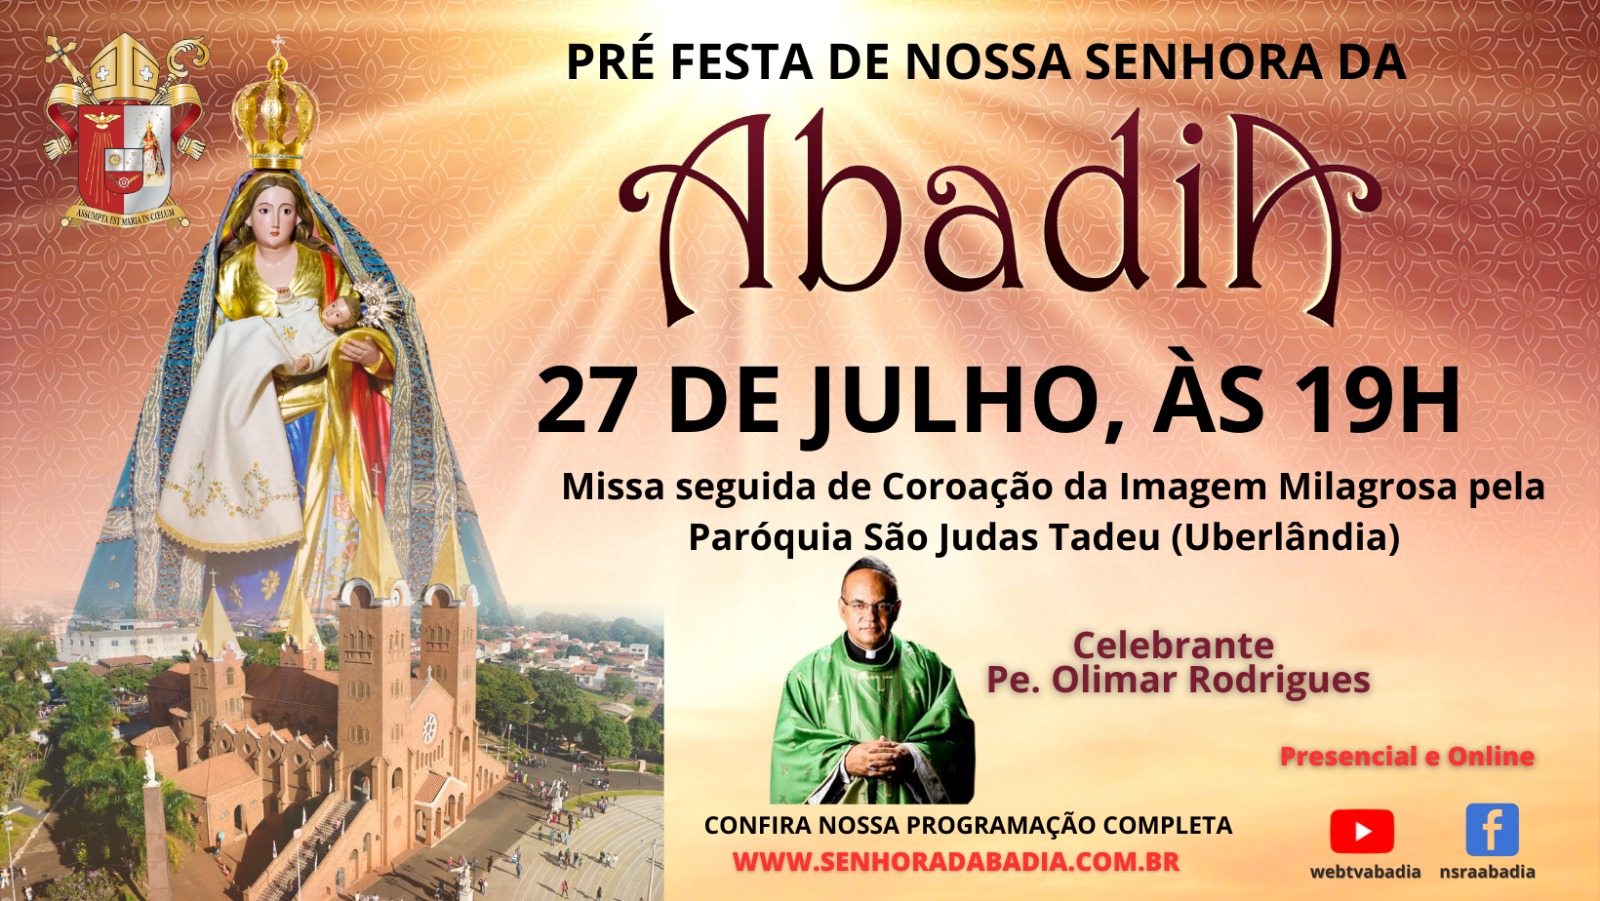 Pre Festa de Nossa Senhora da Abadia - Missa com Pe. Olimar - 27/07